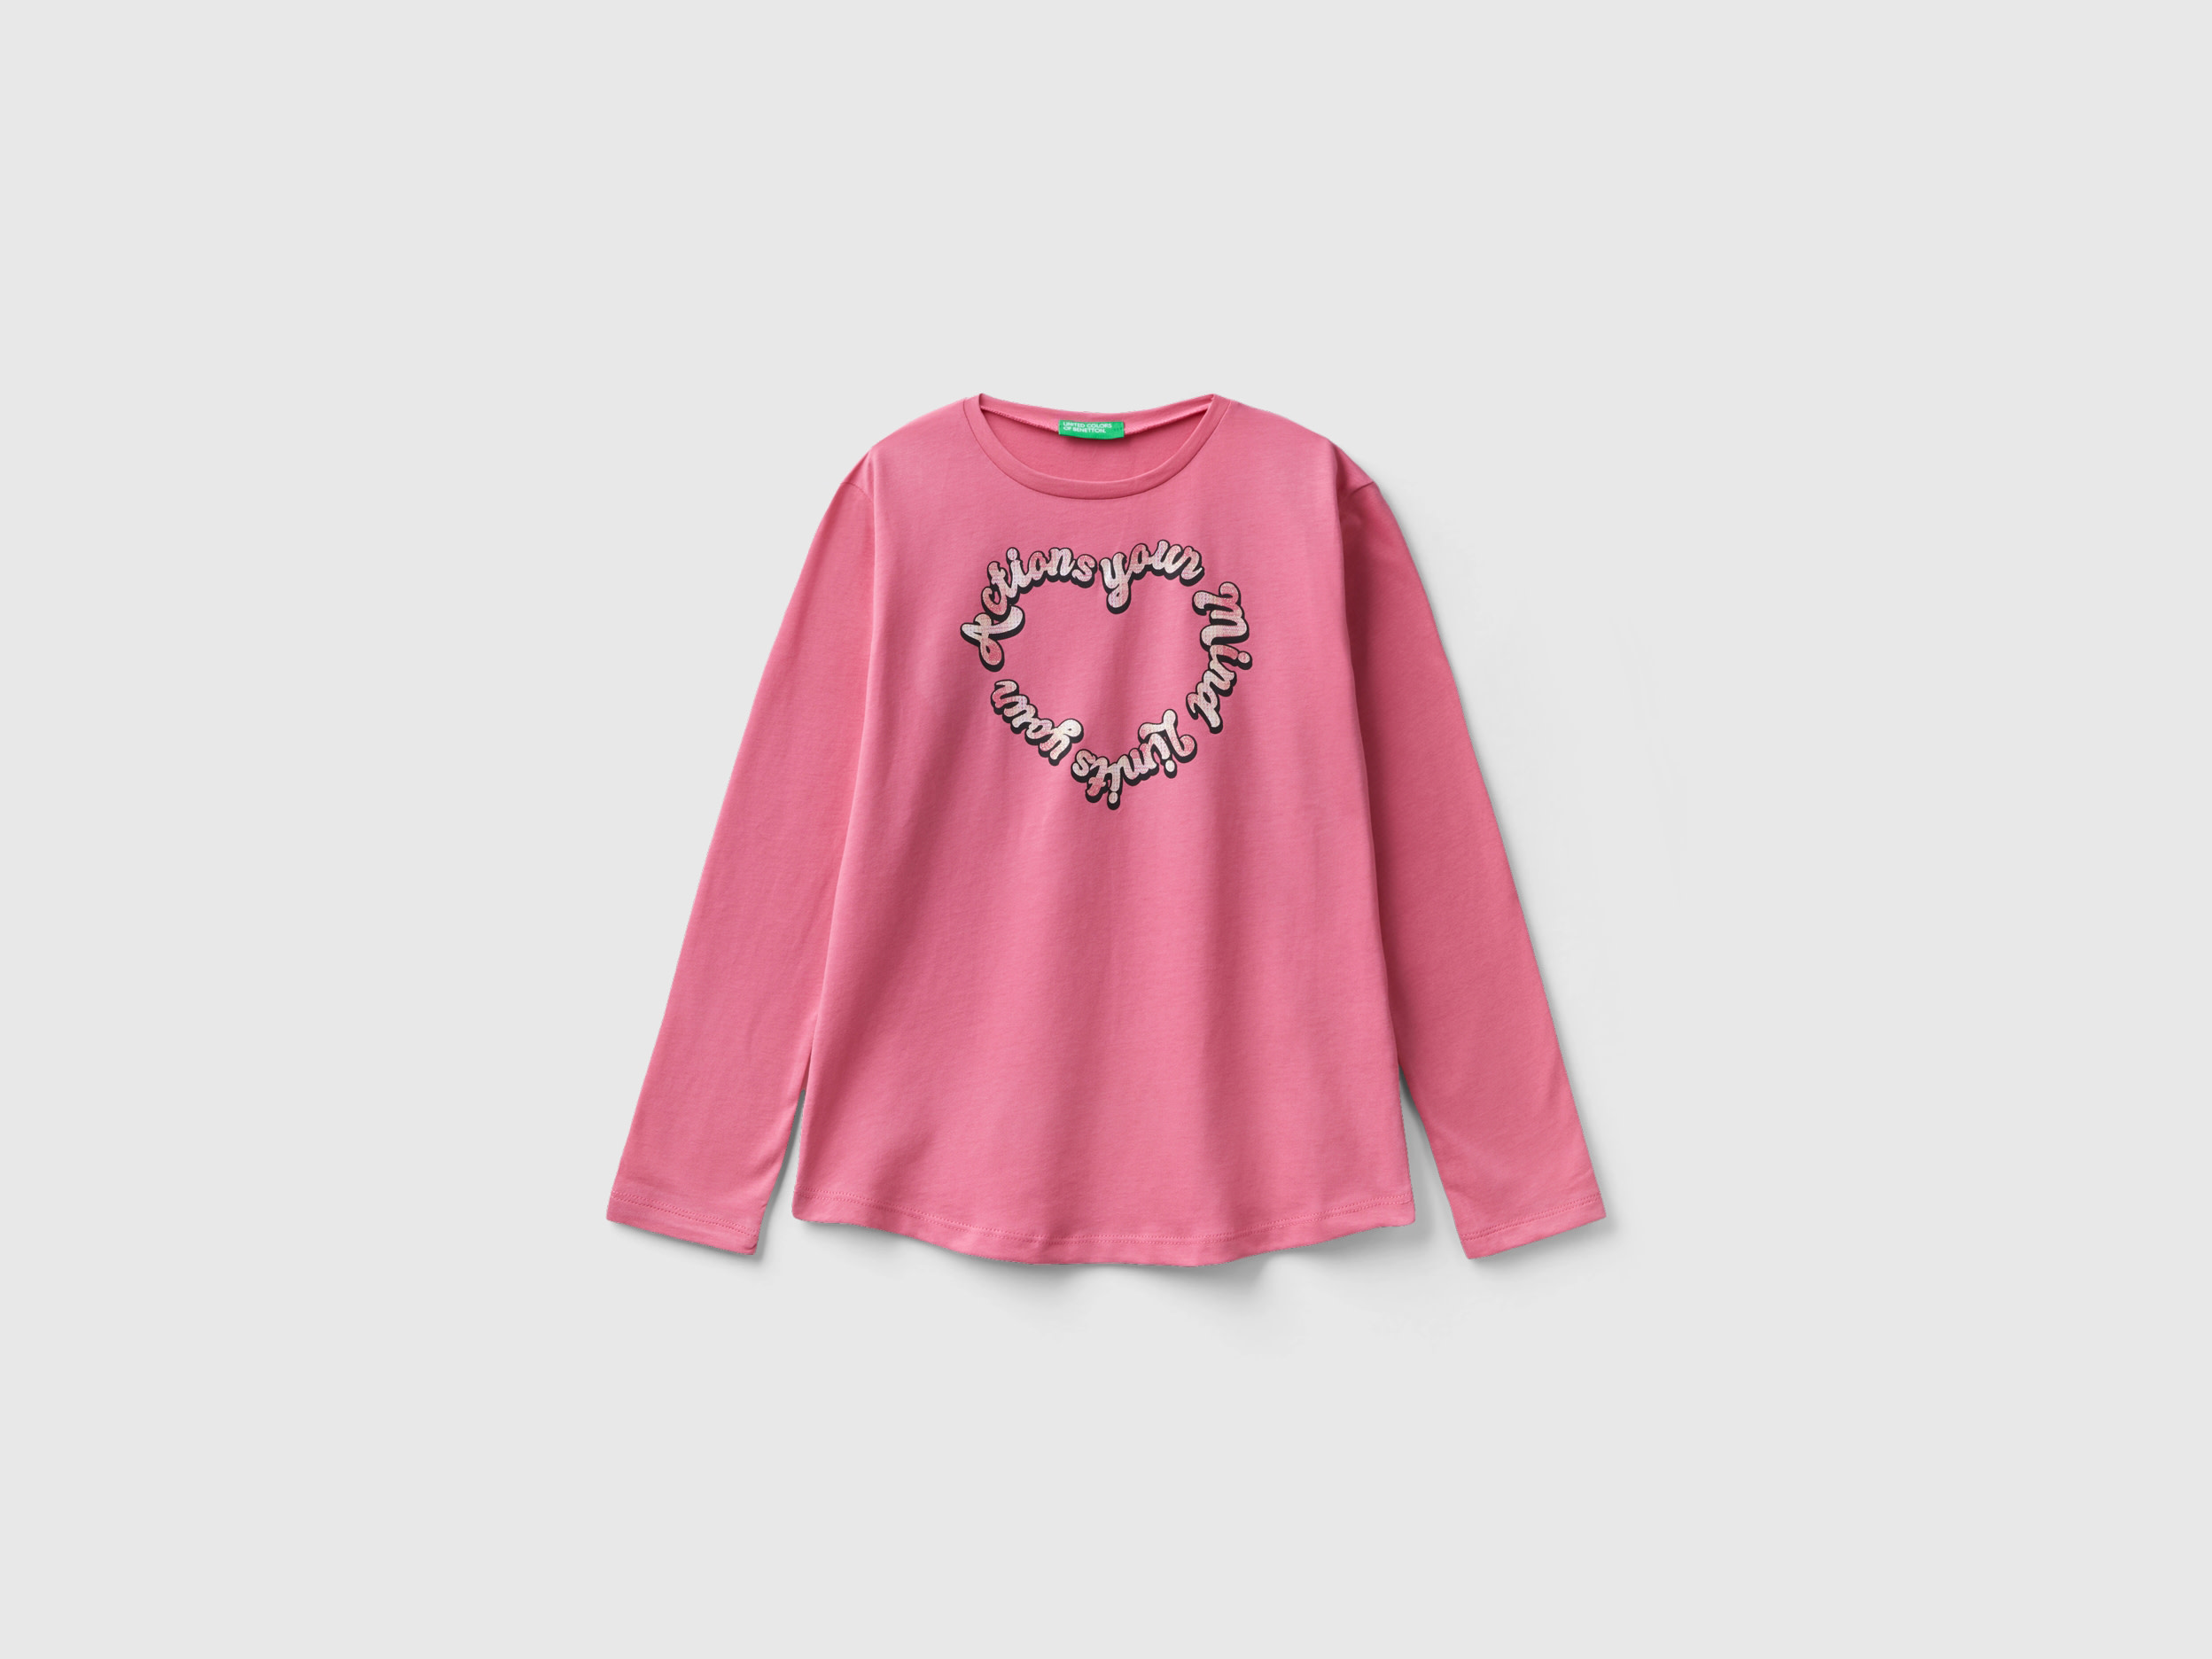 Benetton, Warm Cotton T-shirt With Glittery Print, size 2XL, Pink, Kids